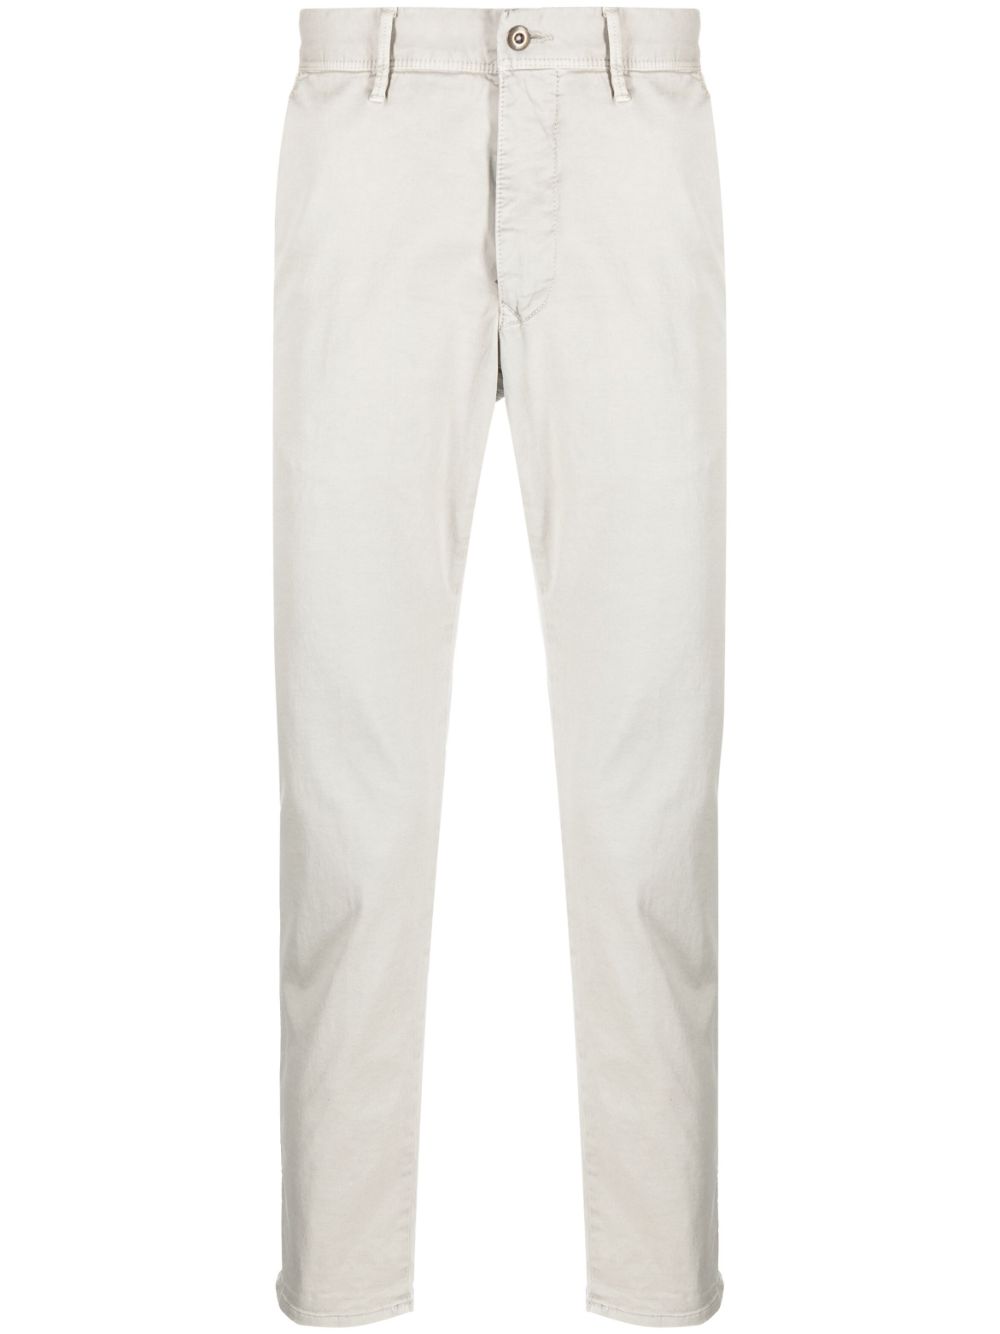 Incotex plain cotton chino trousers